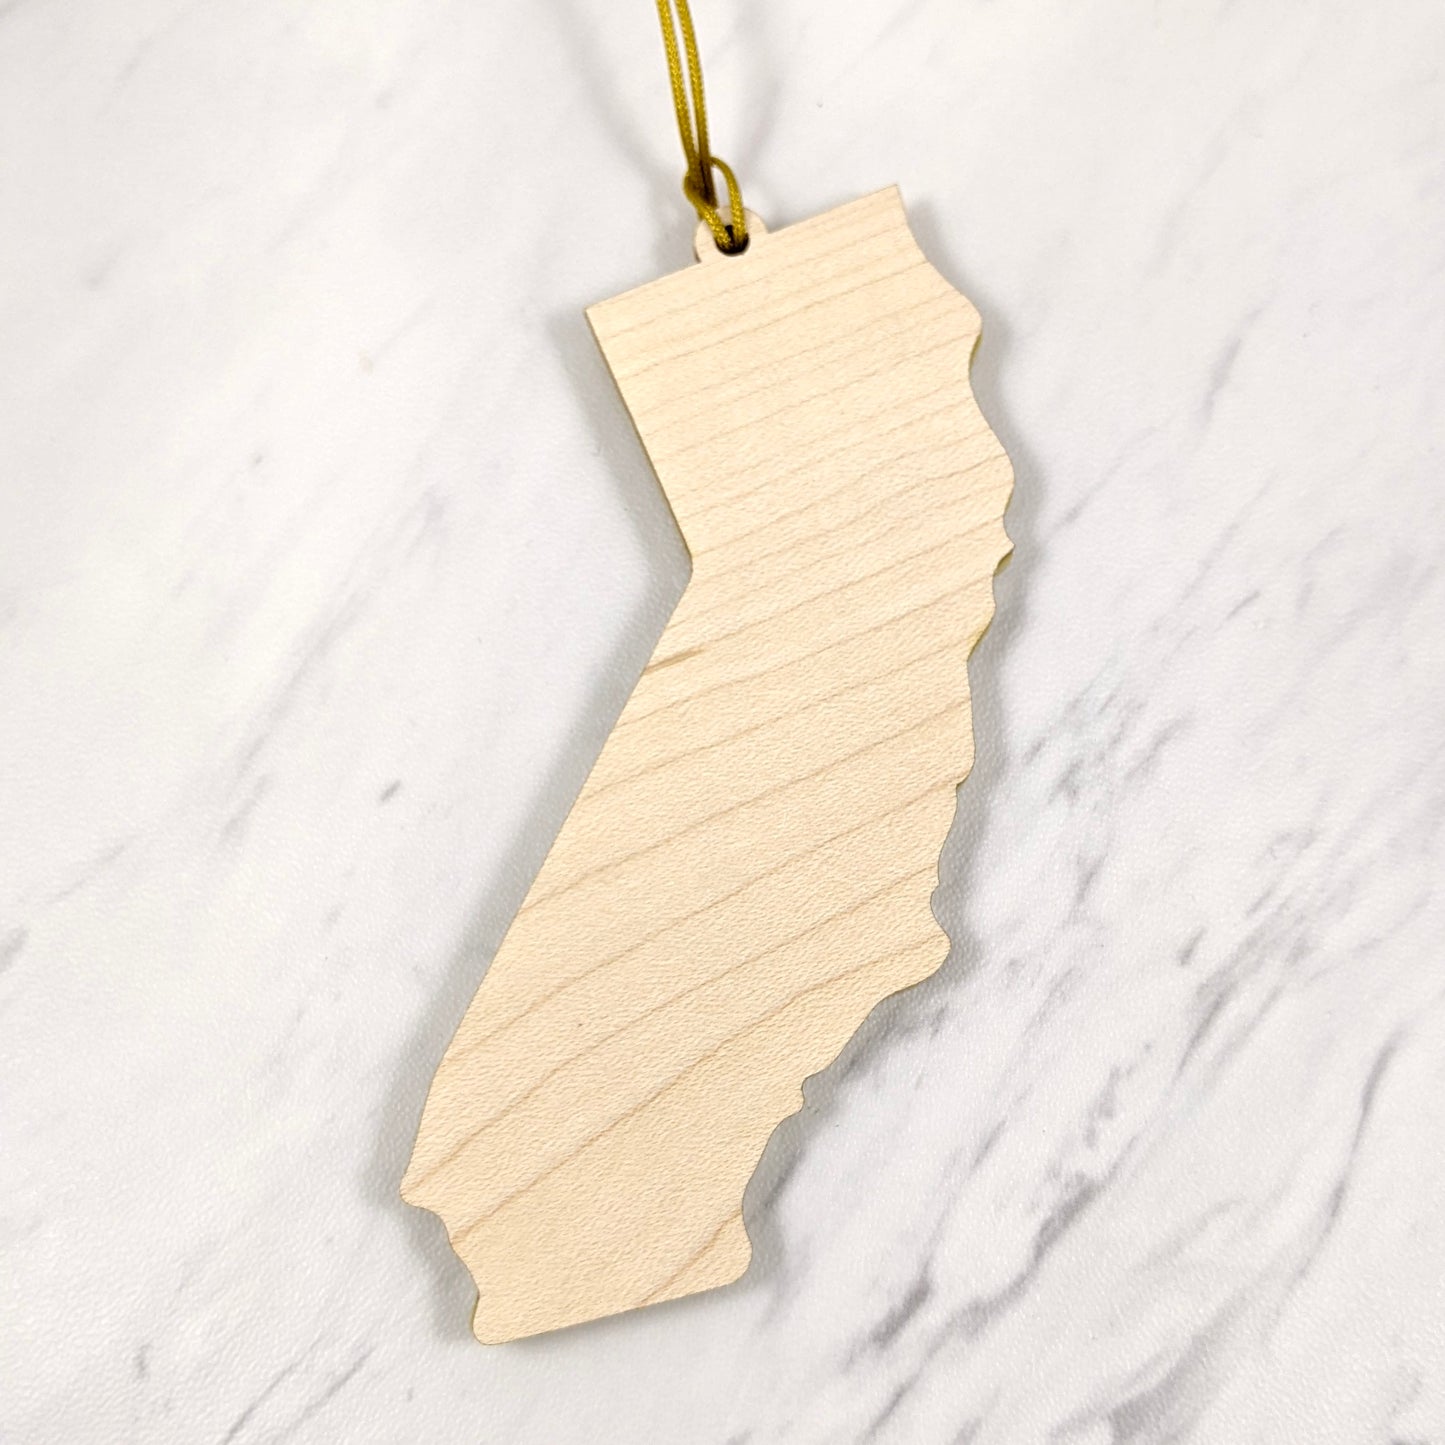 California Poppy State Shaped Ornament